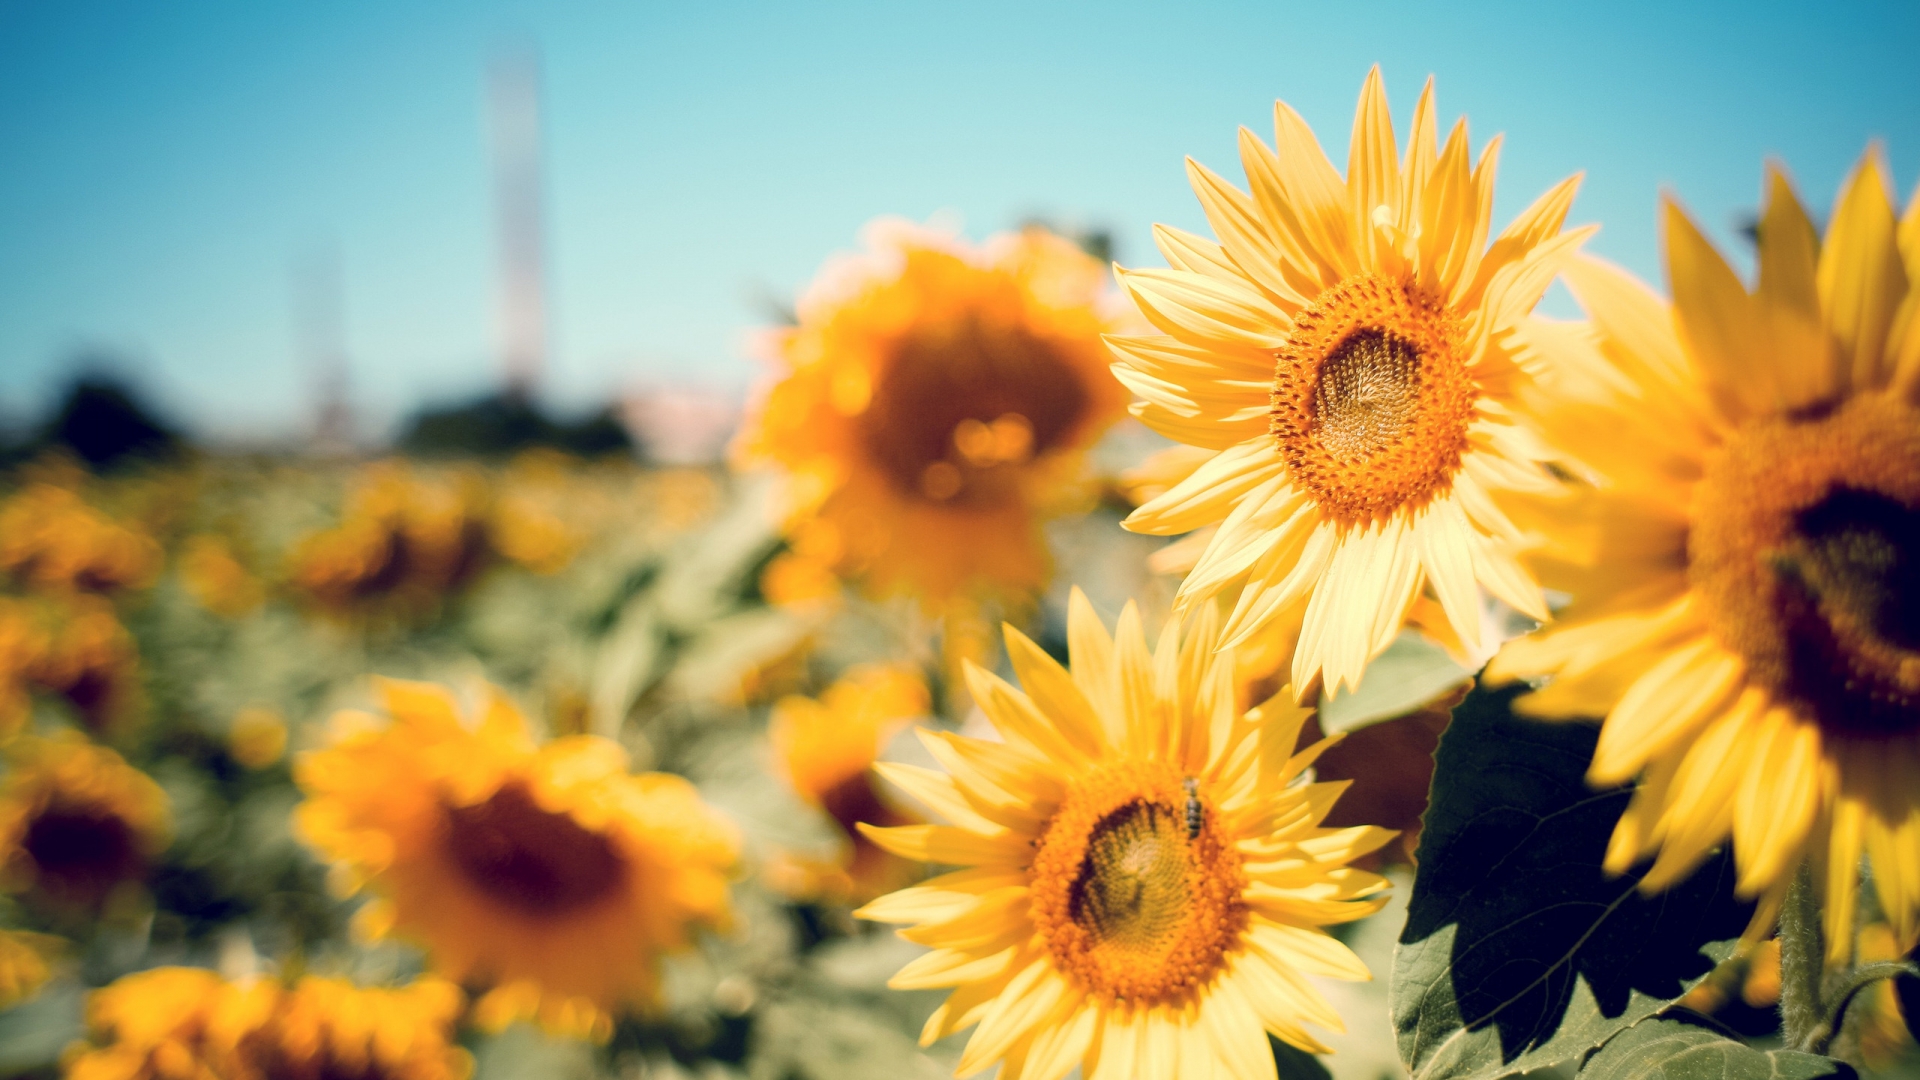 Beautiful Sunflowers for 1920 x 1080 HDTV 1080p resolution